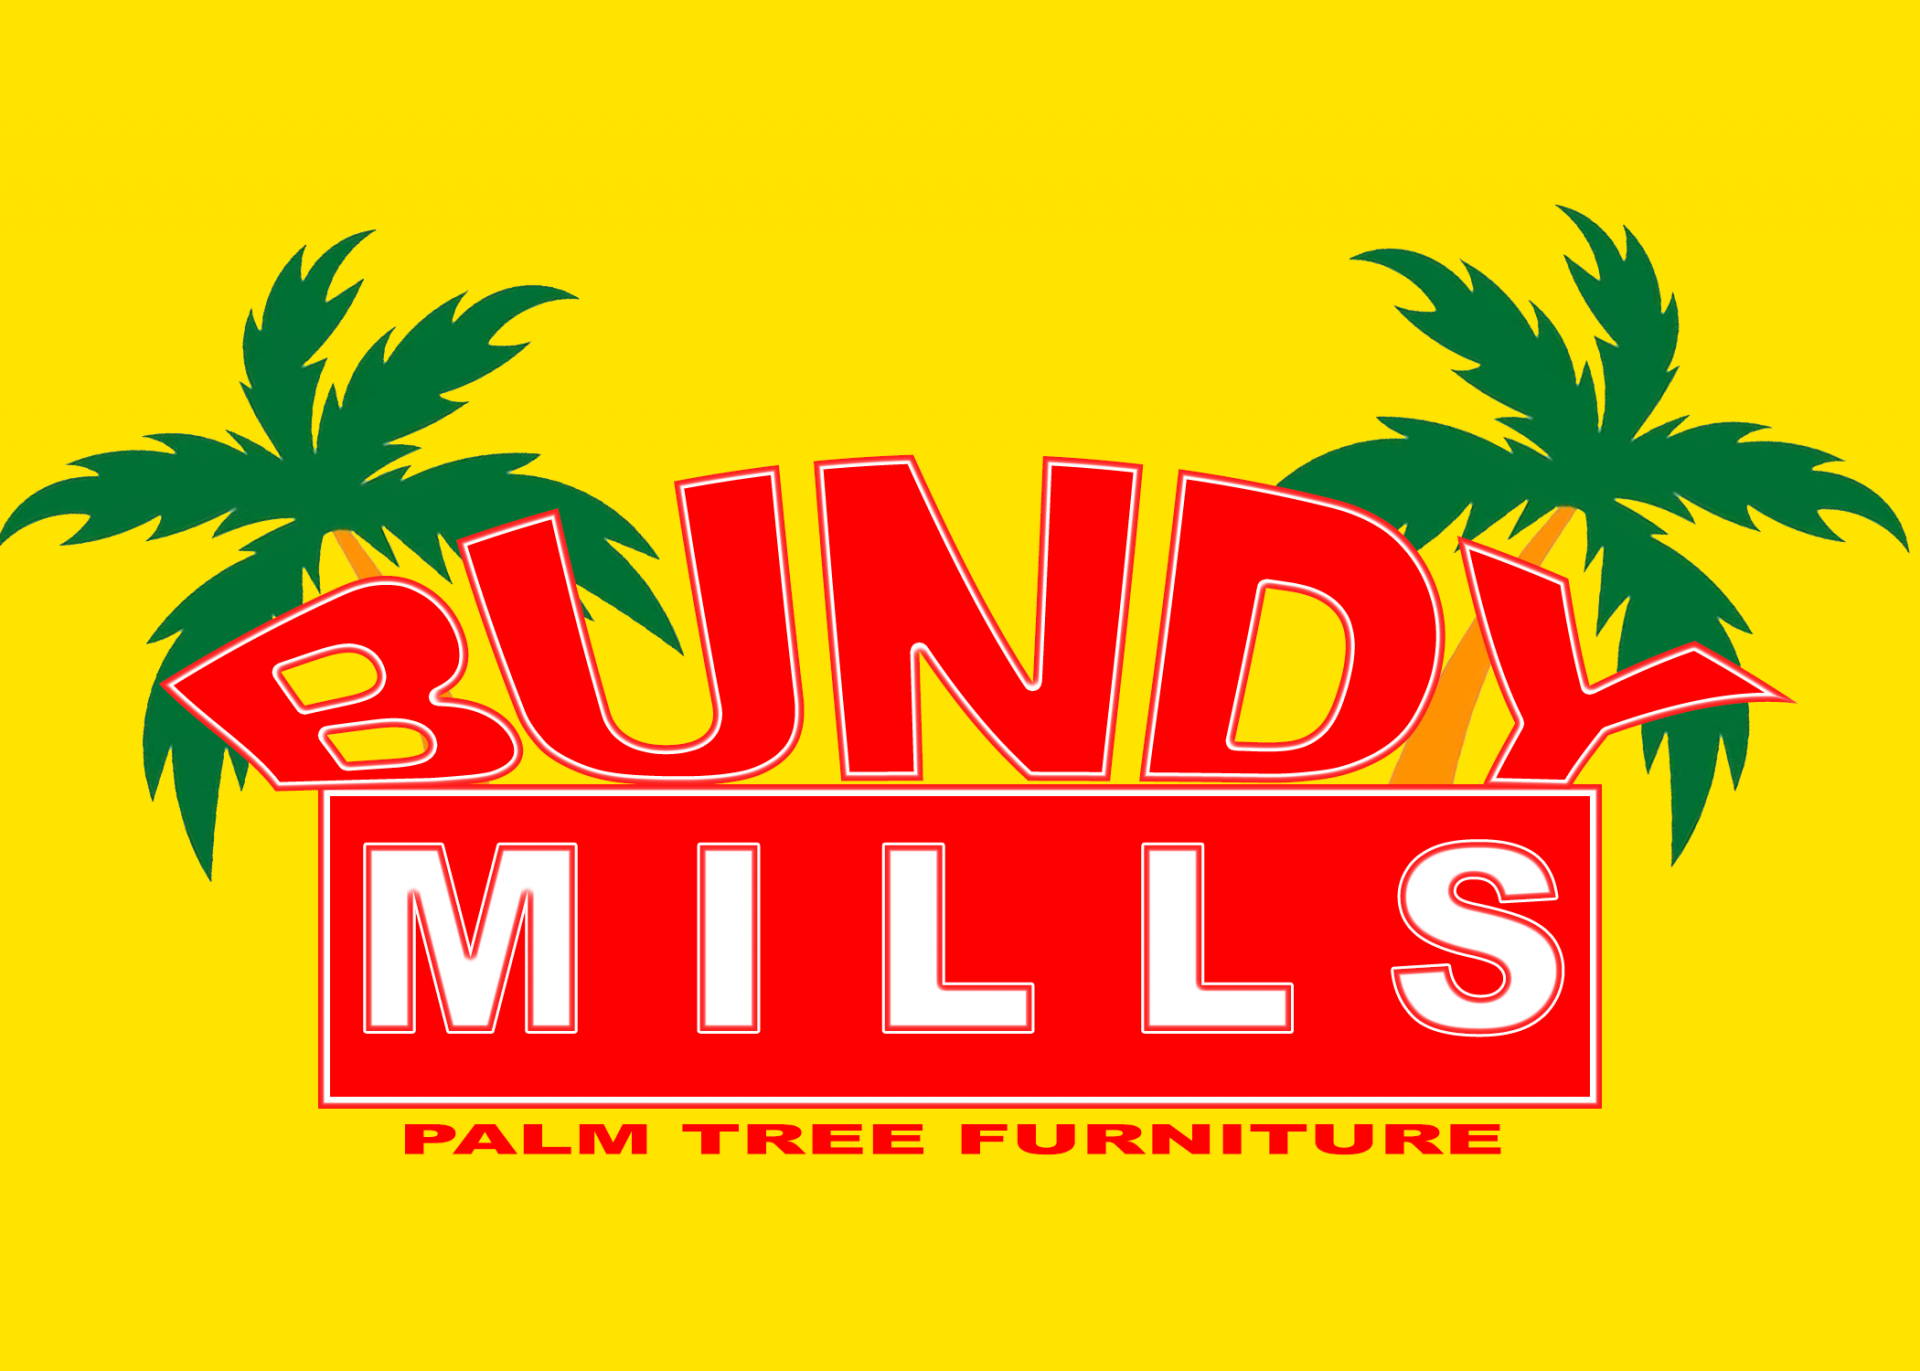 bundy mills